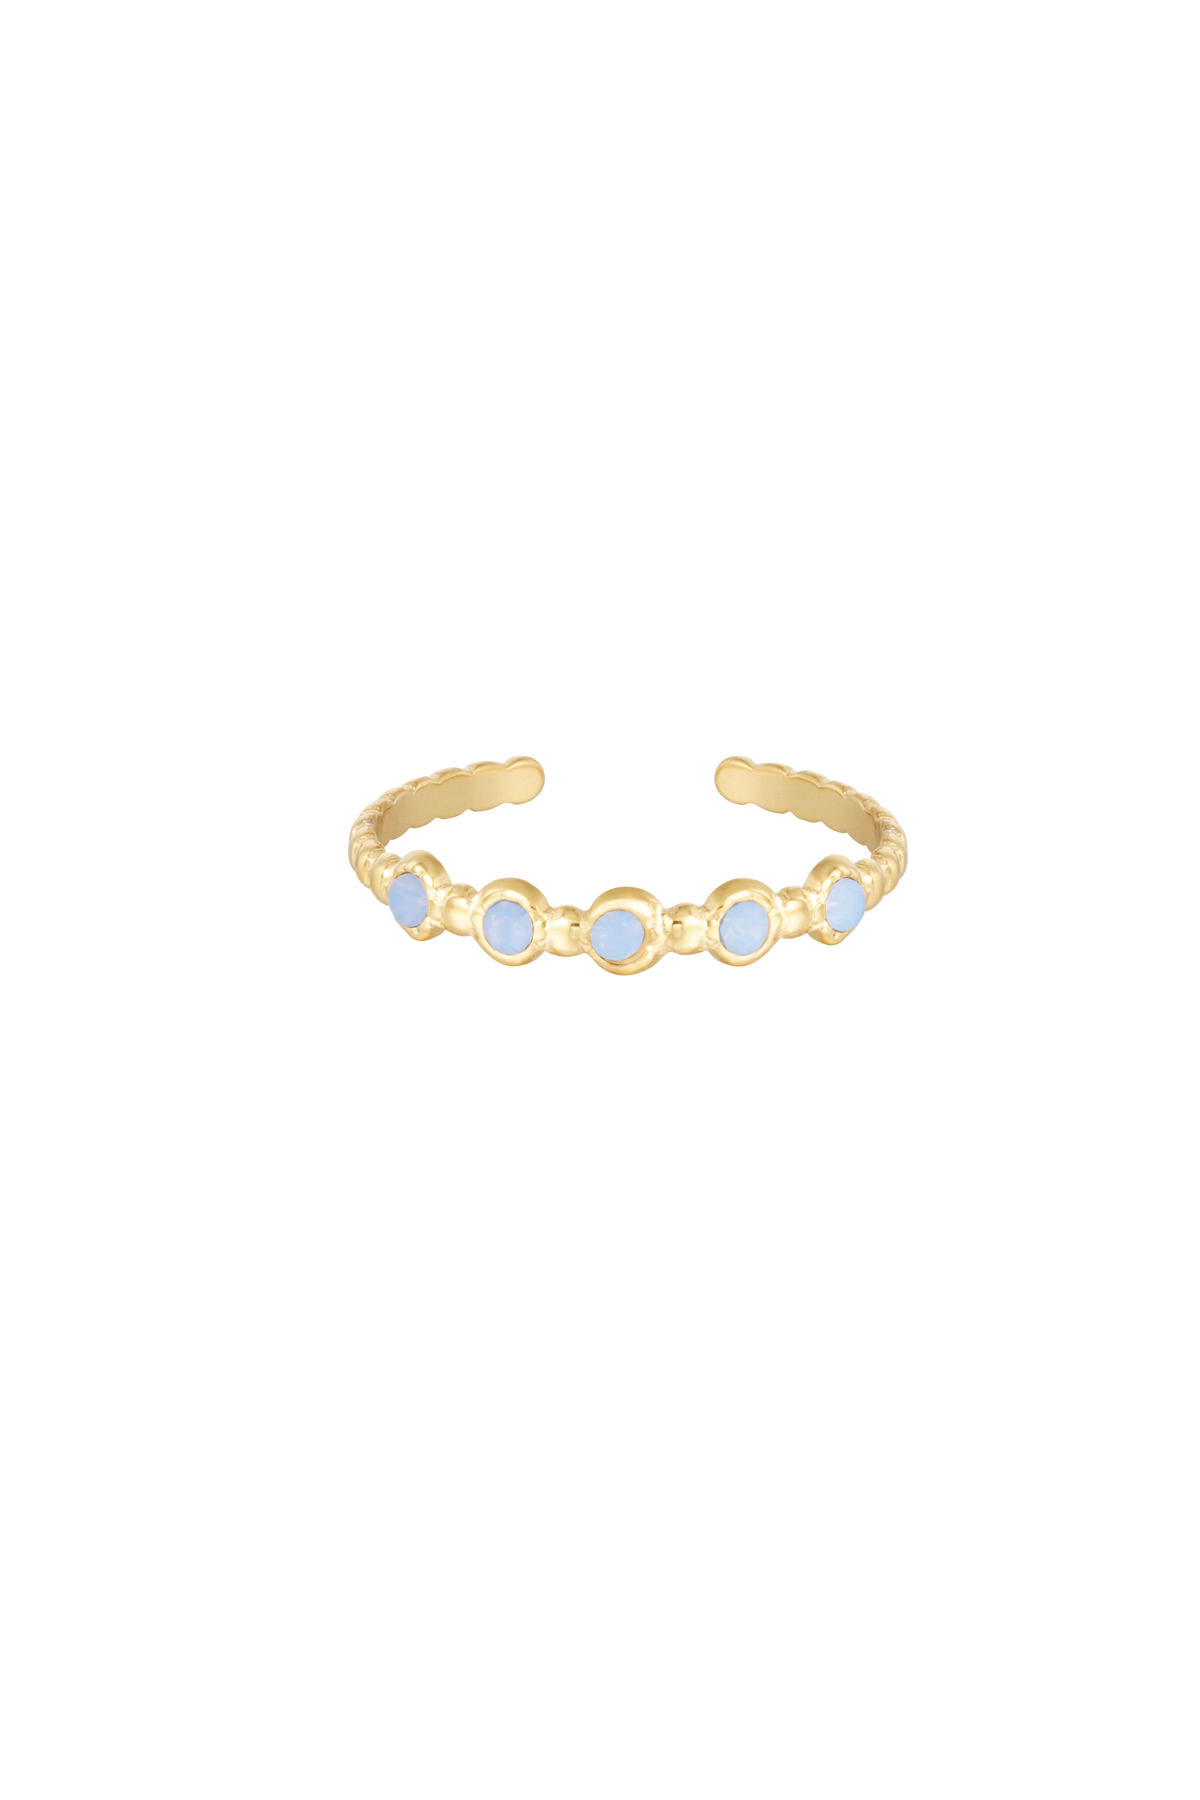 Ring steentjes - goud/blauw 